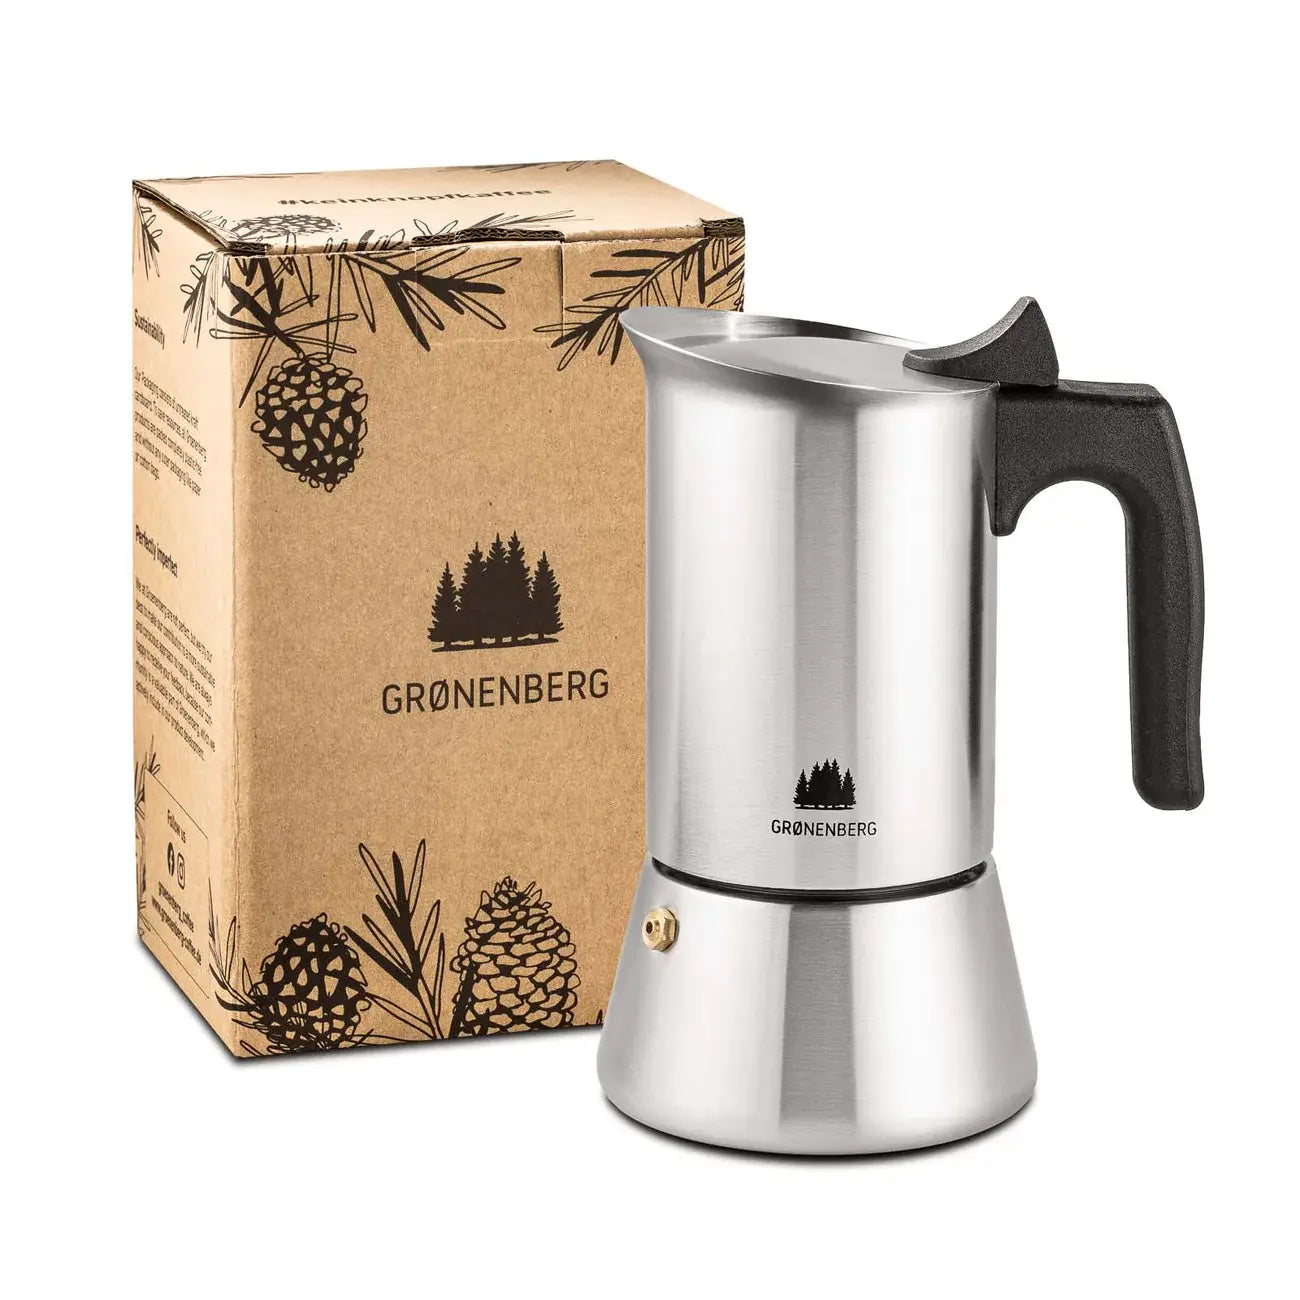 Geheim Korting soort Moka Italian stainless steel espresso coffee maker - 6 cups / Groenenberg -  Casambu.com